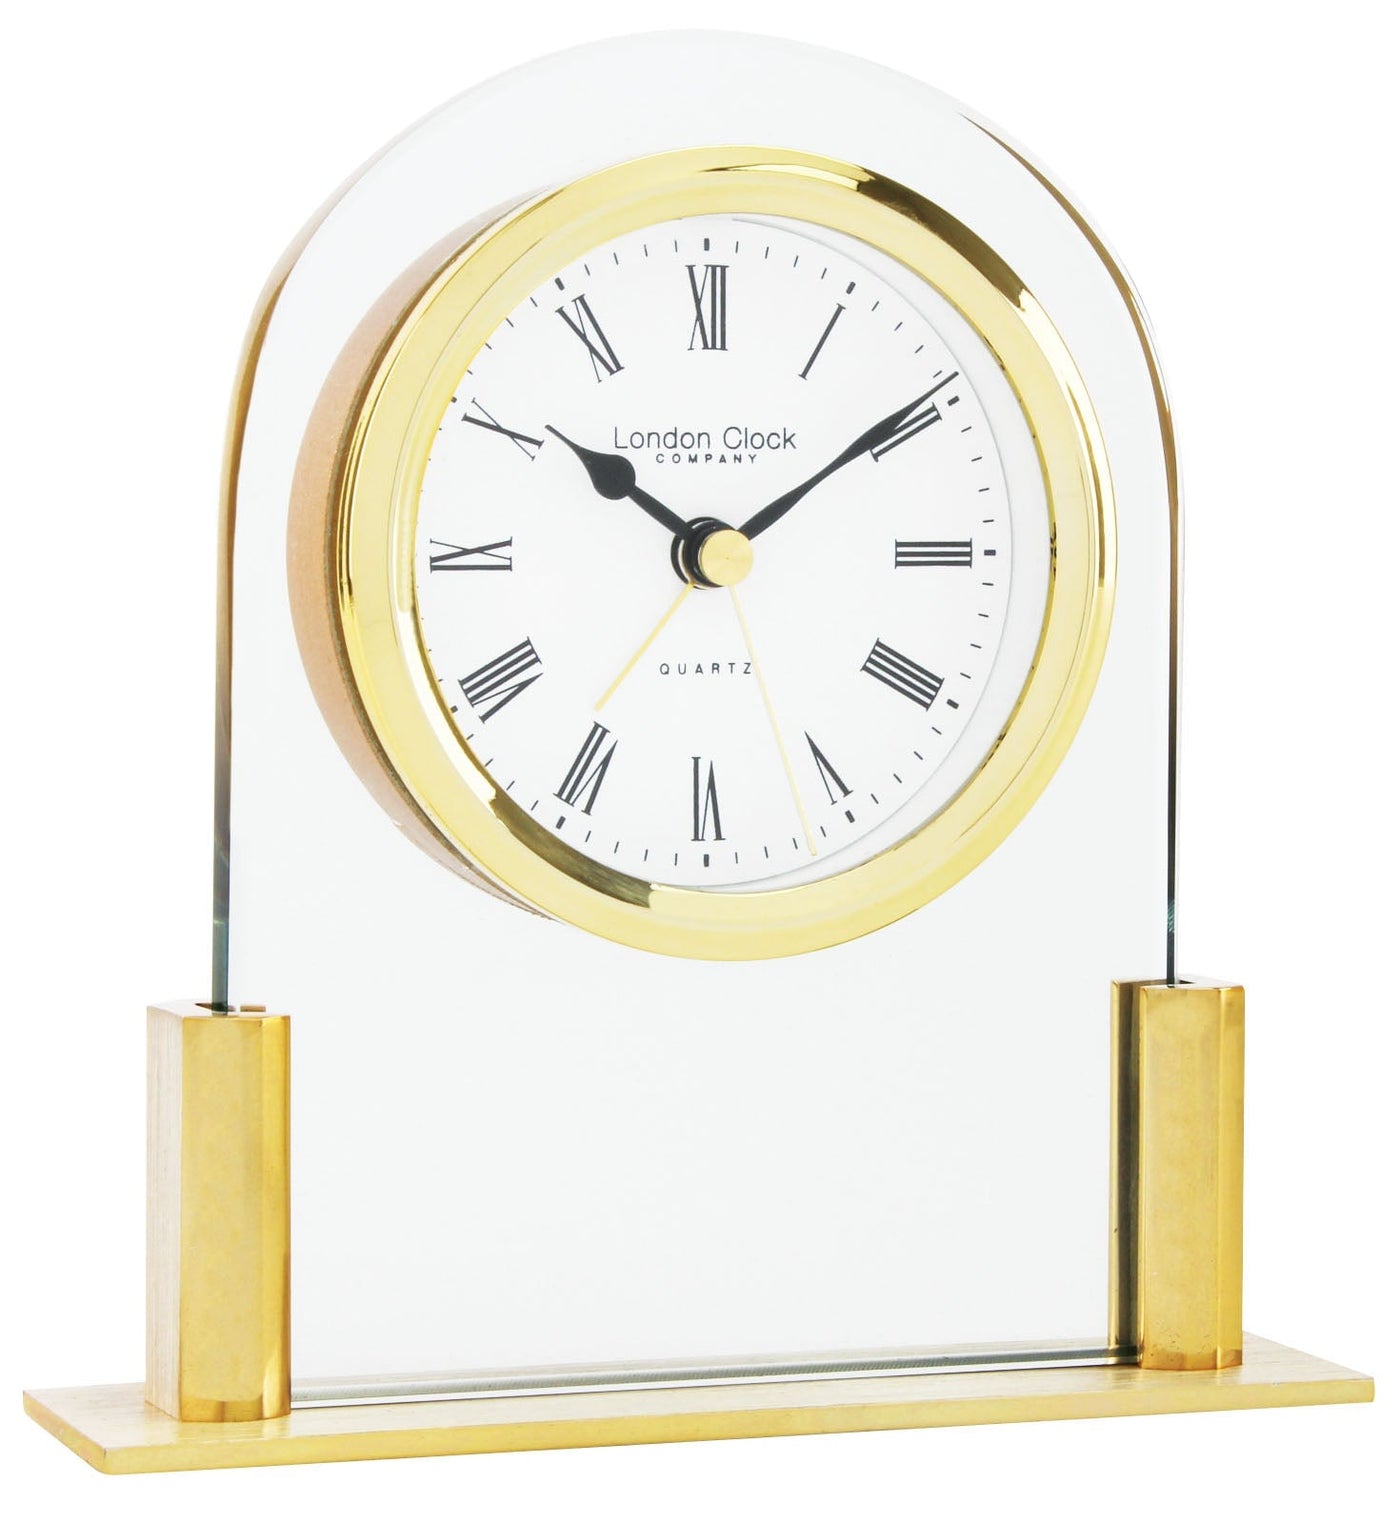 London Clock Company. Glass Arch top Mantel Clock Gold *AWAITING SOCK* - timeframedclocks